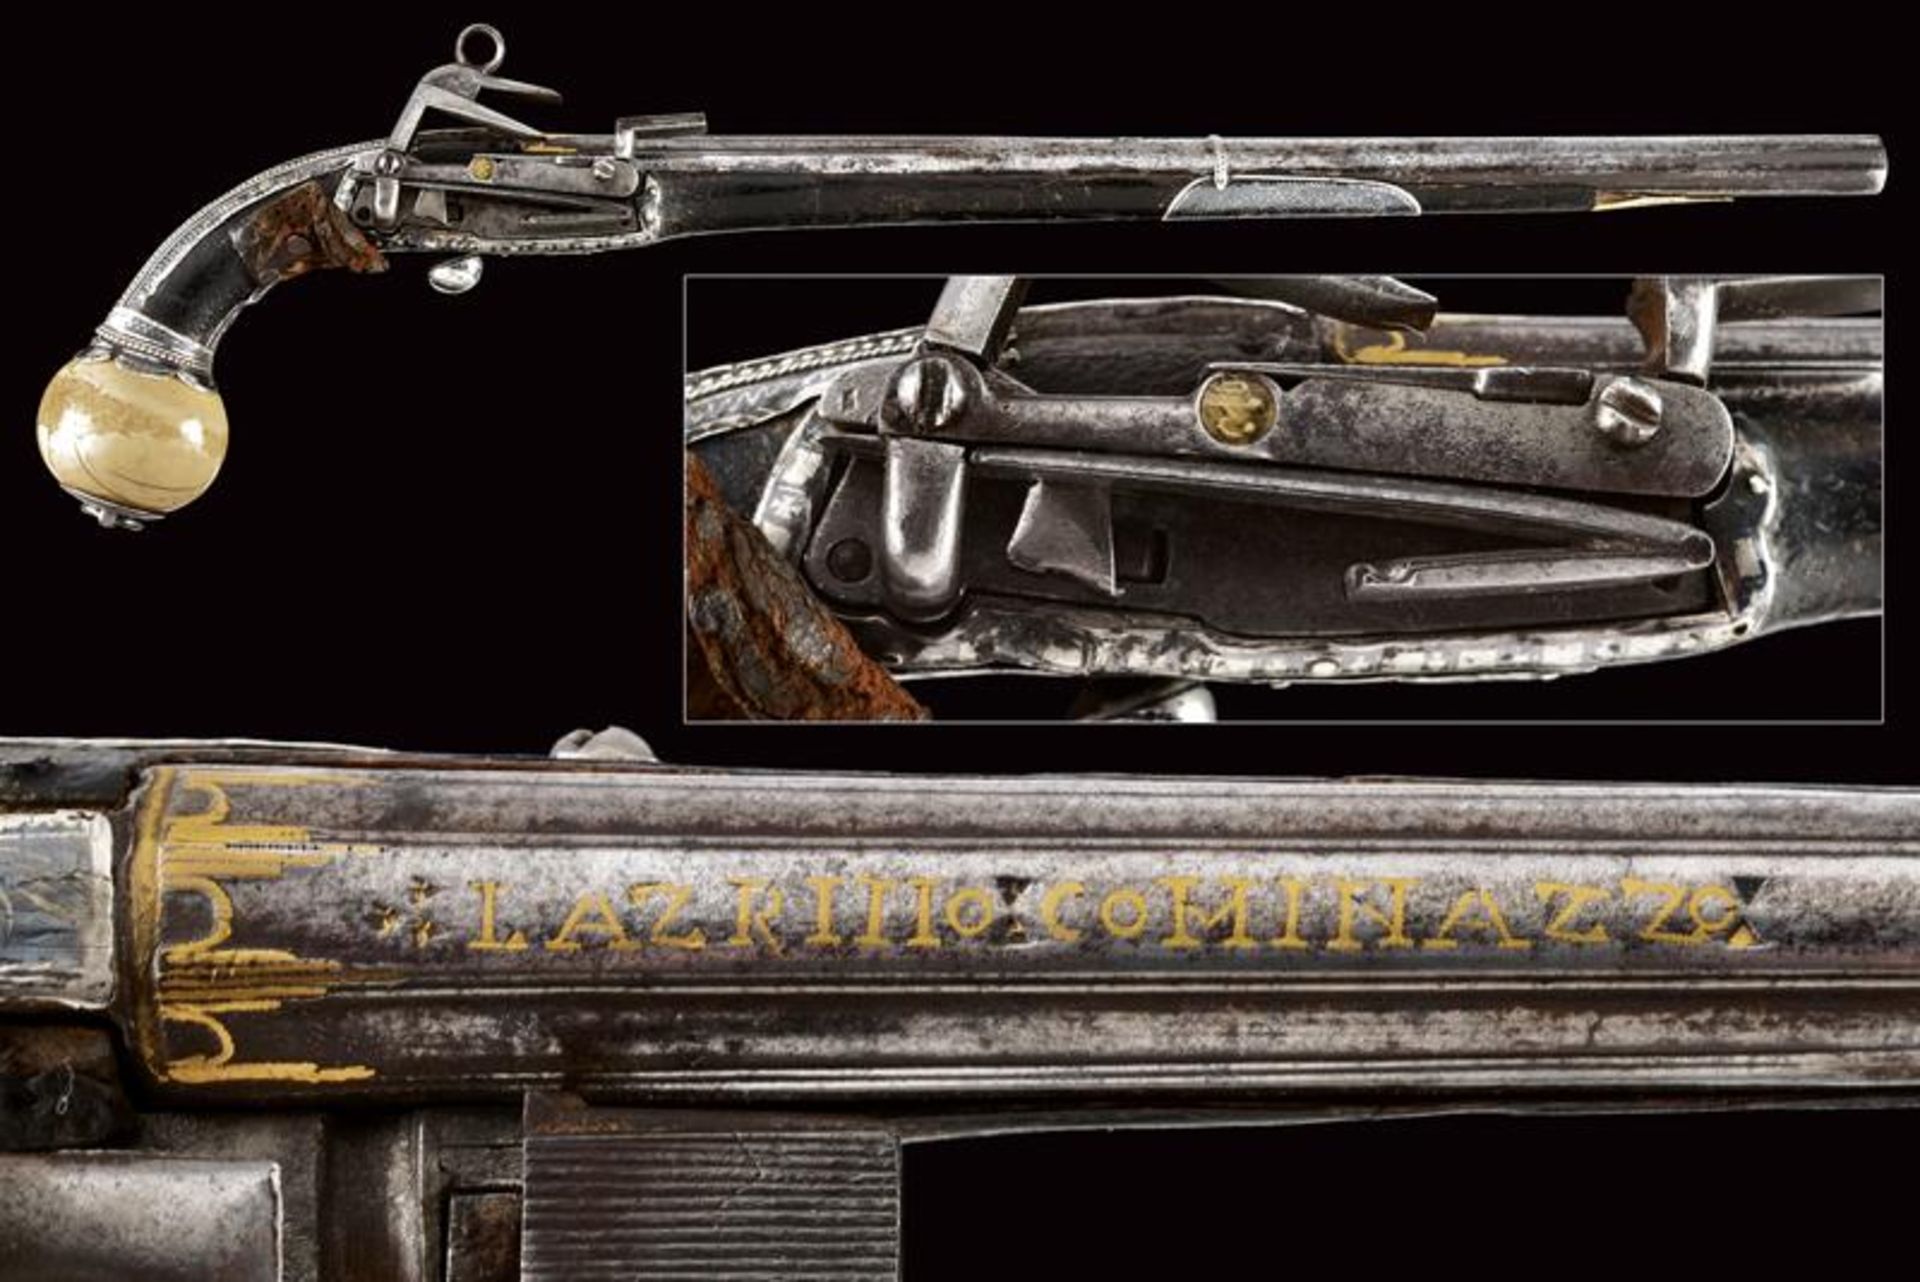 A fine cossack's flintlock pistol